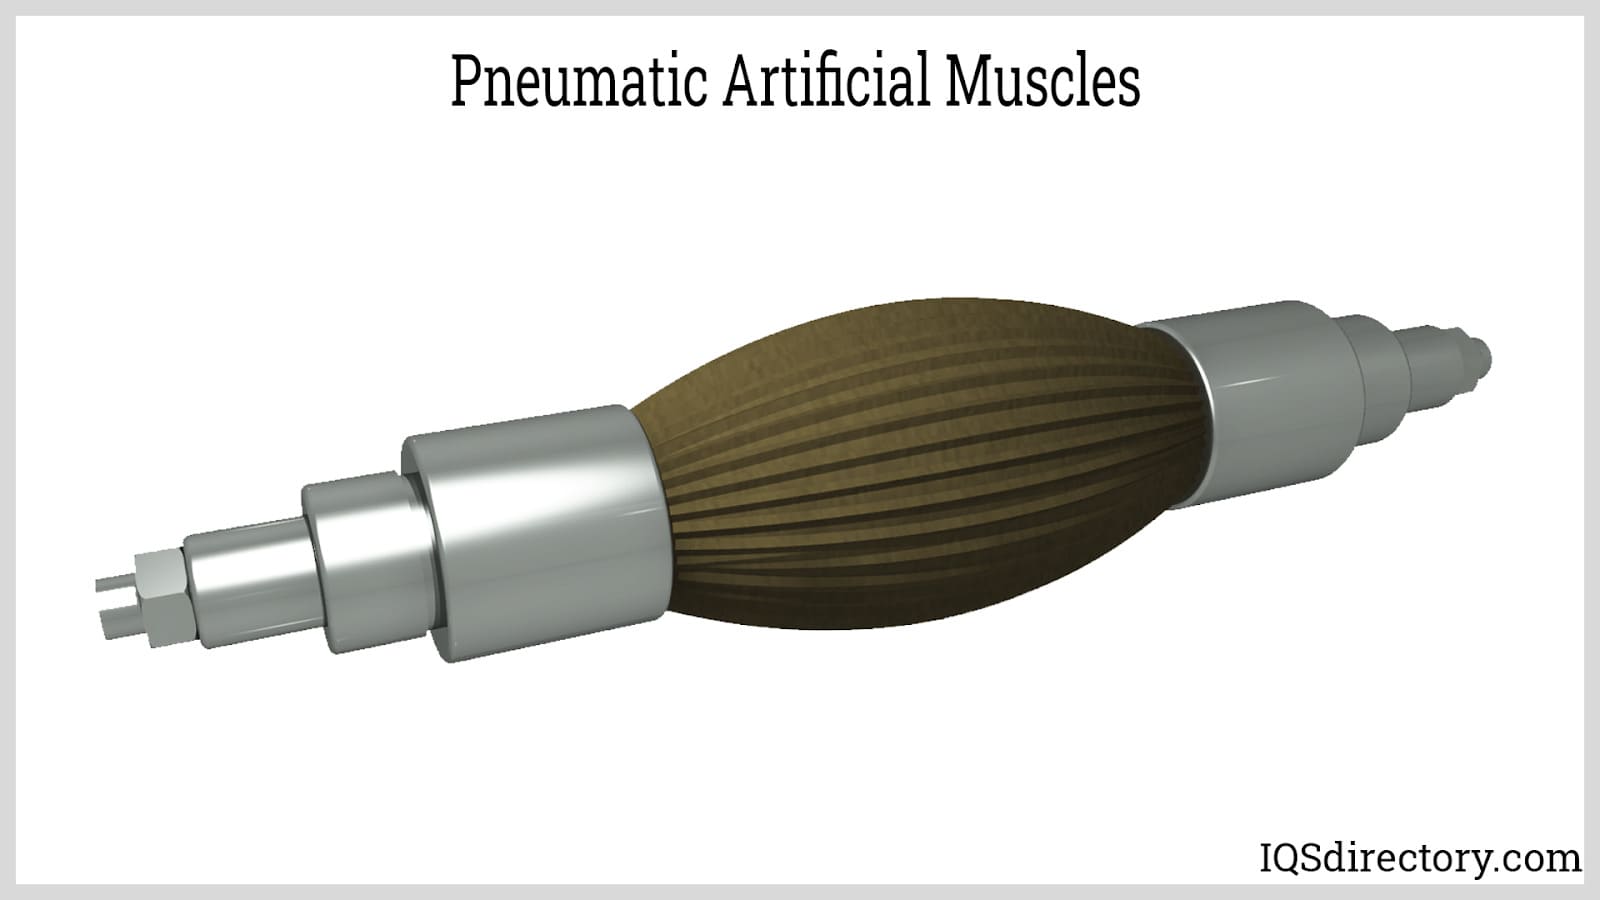 Pneumatic Artificial Muscles